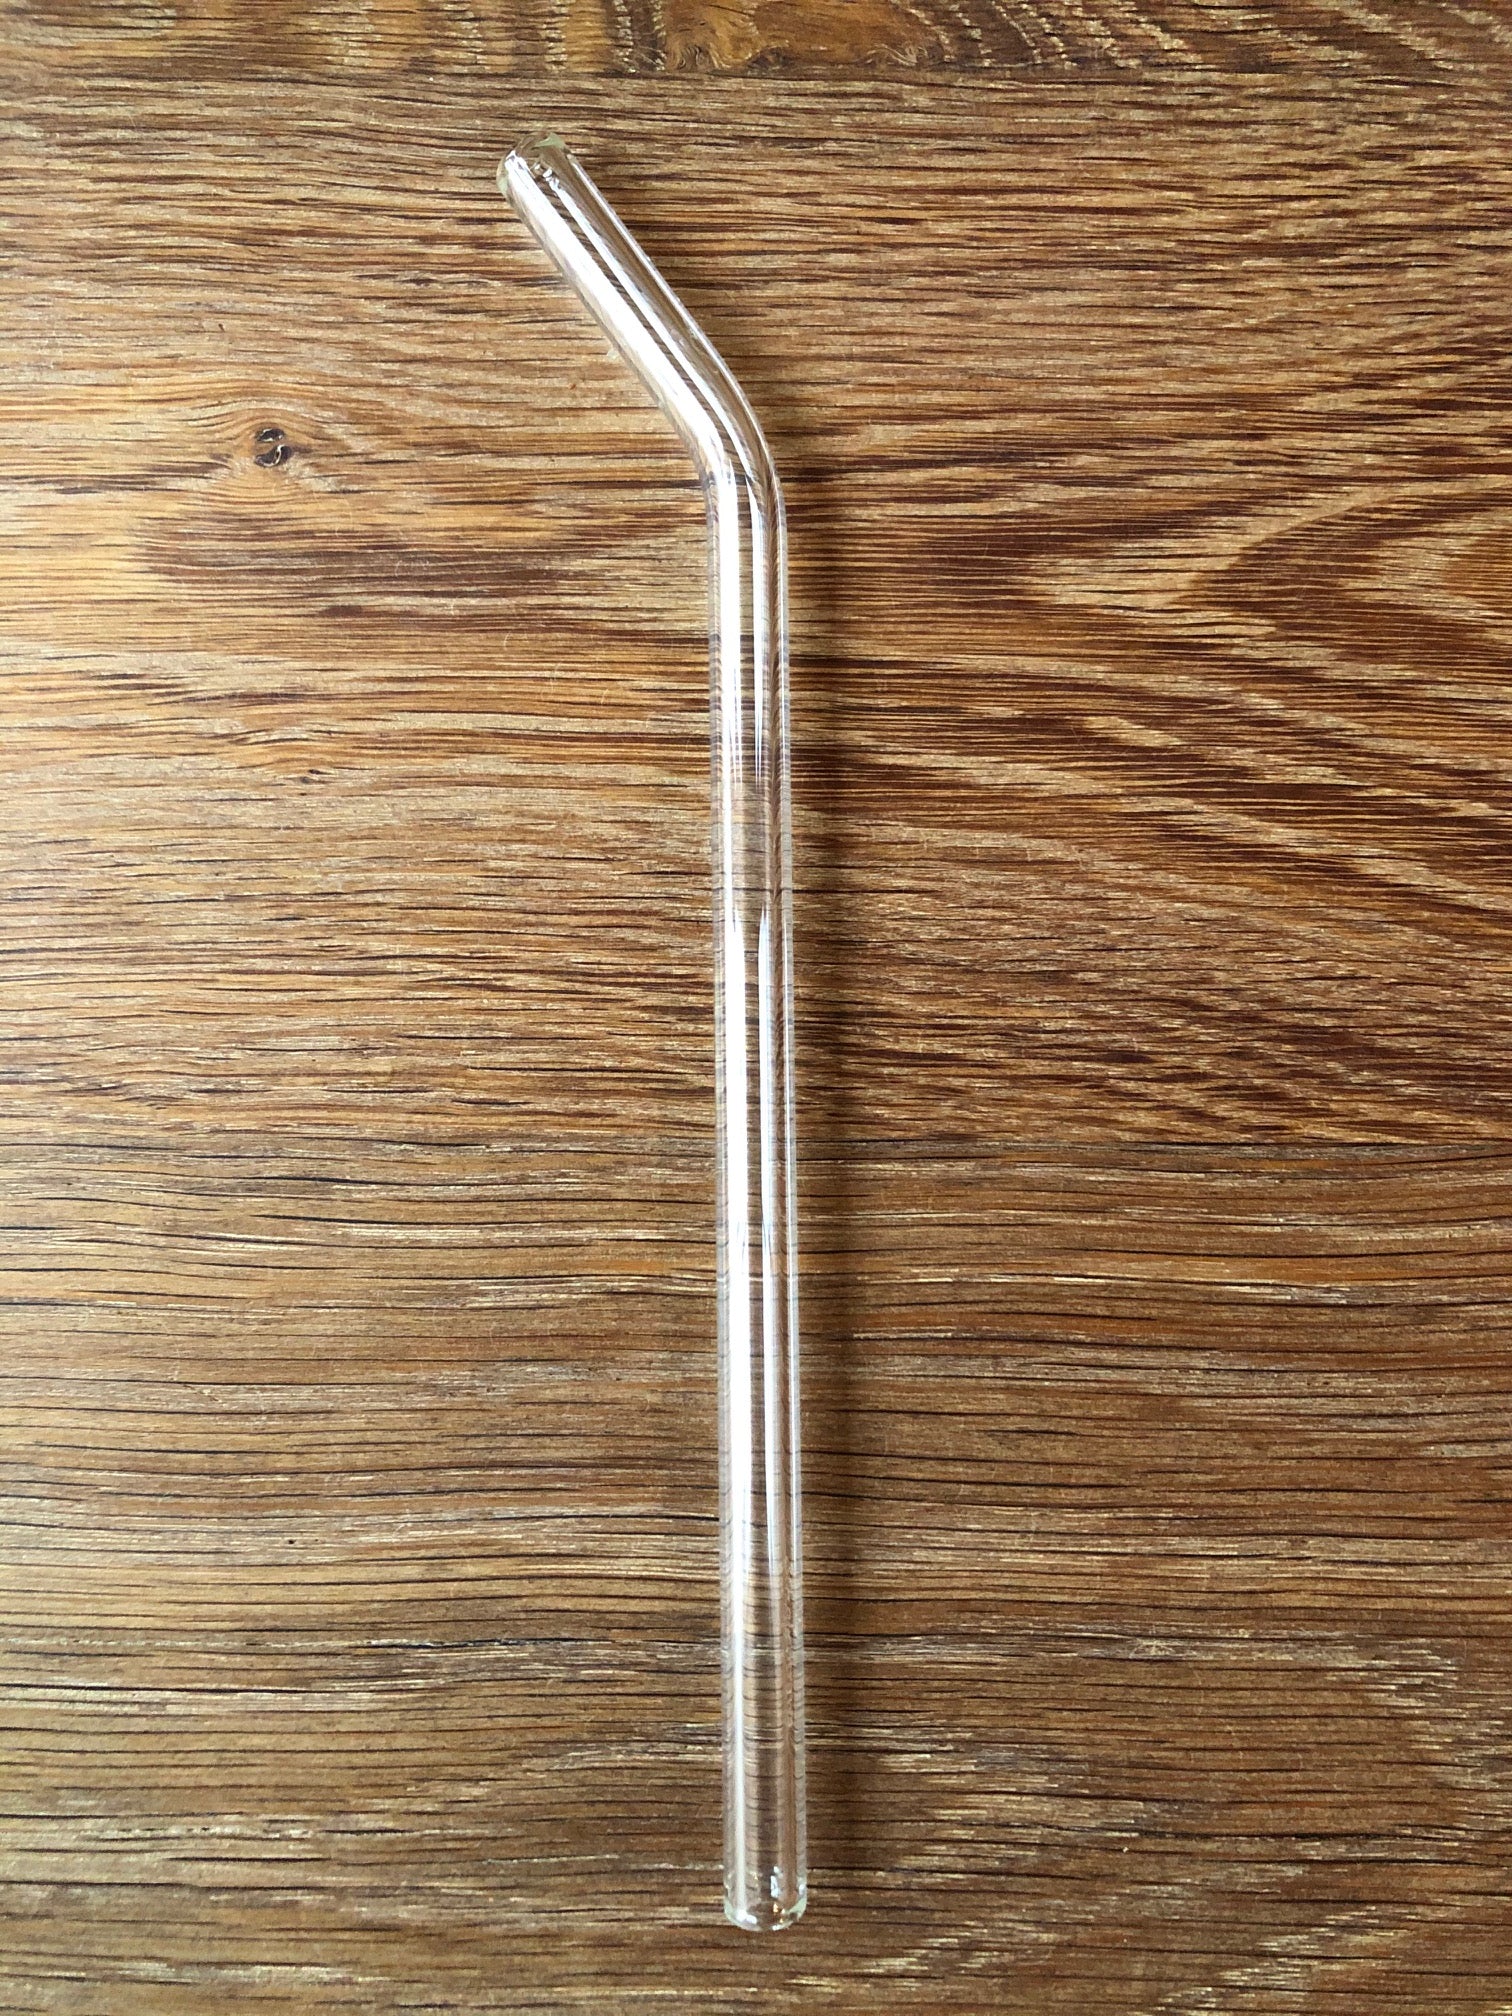 GREEN 4 GLASS STRAWS - LONG, 9MM